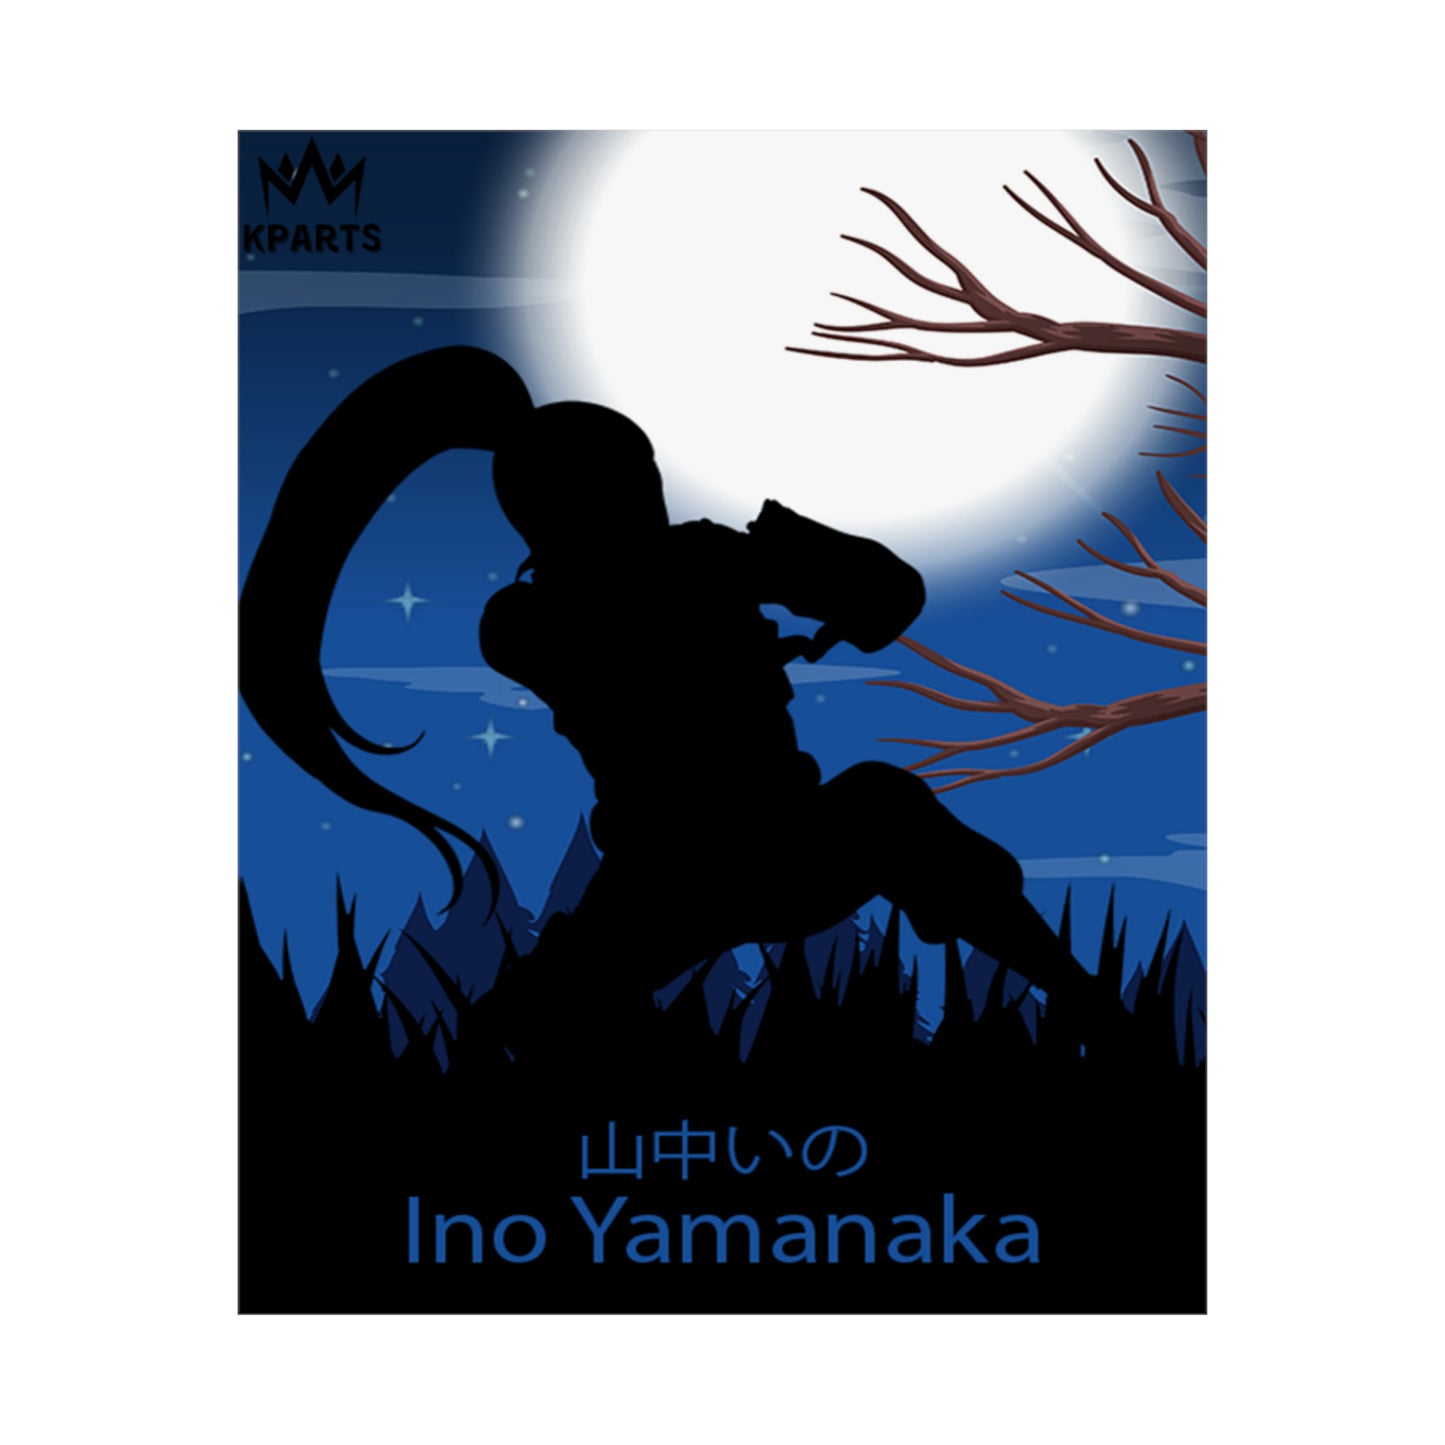 Ino Yamanaka Minimalist Poster #6